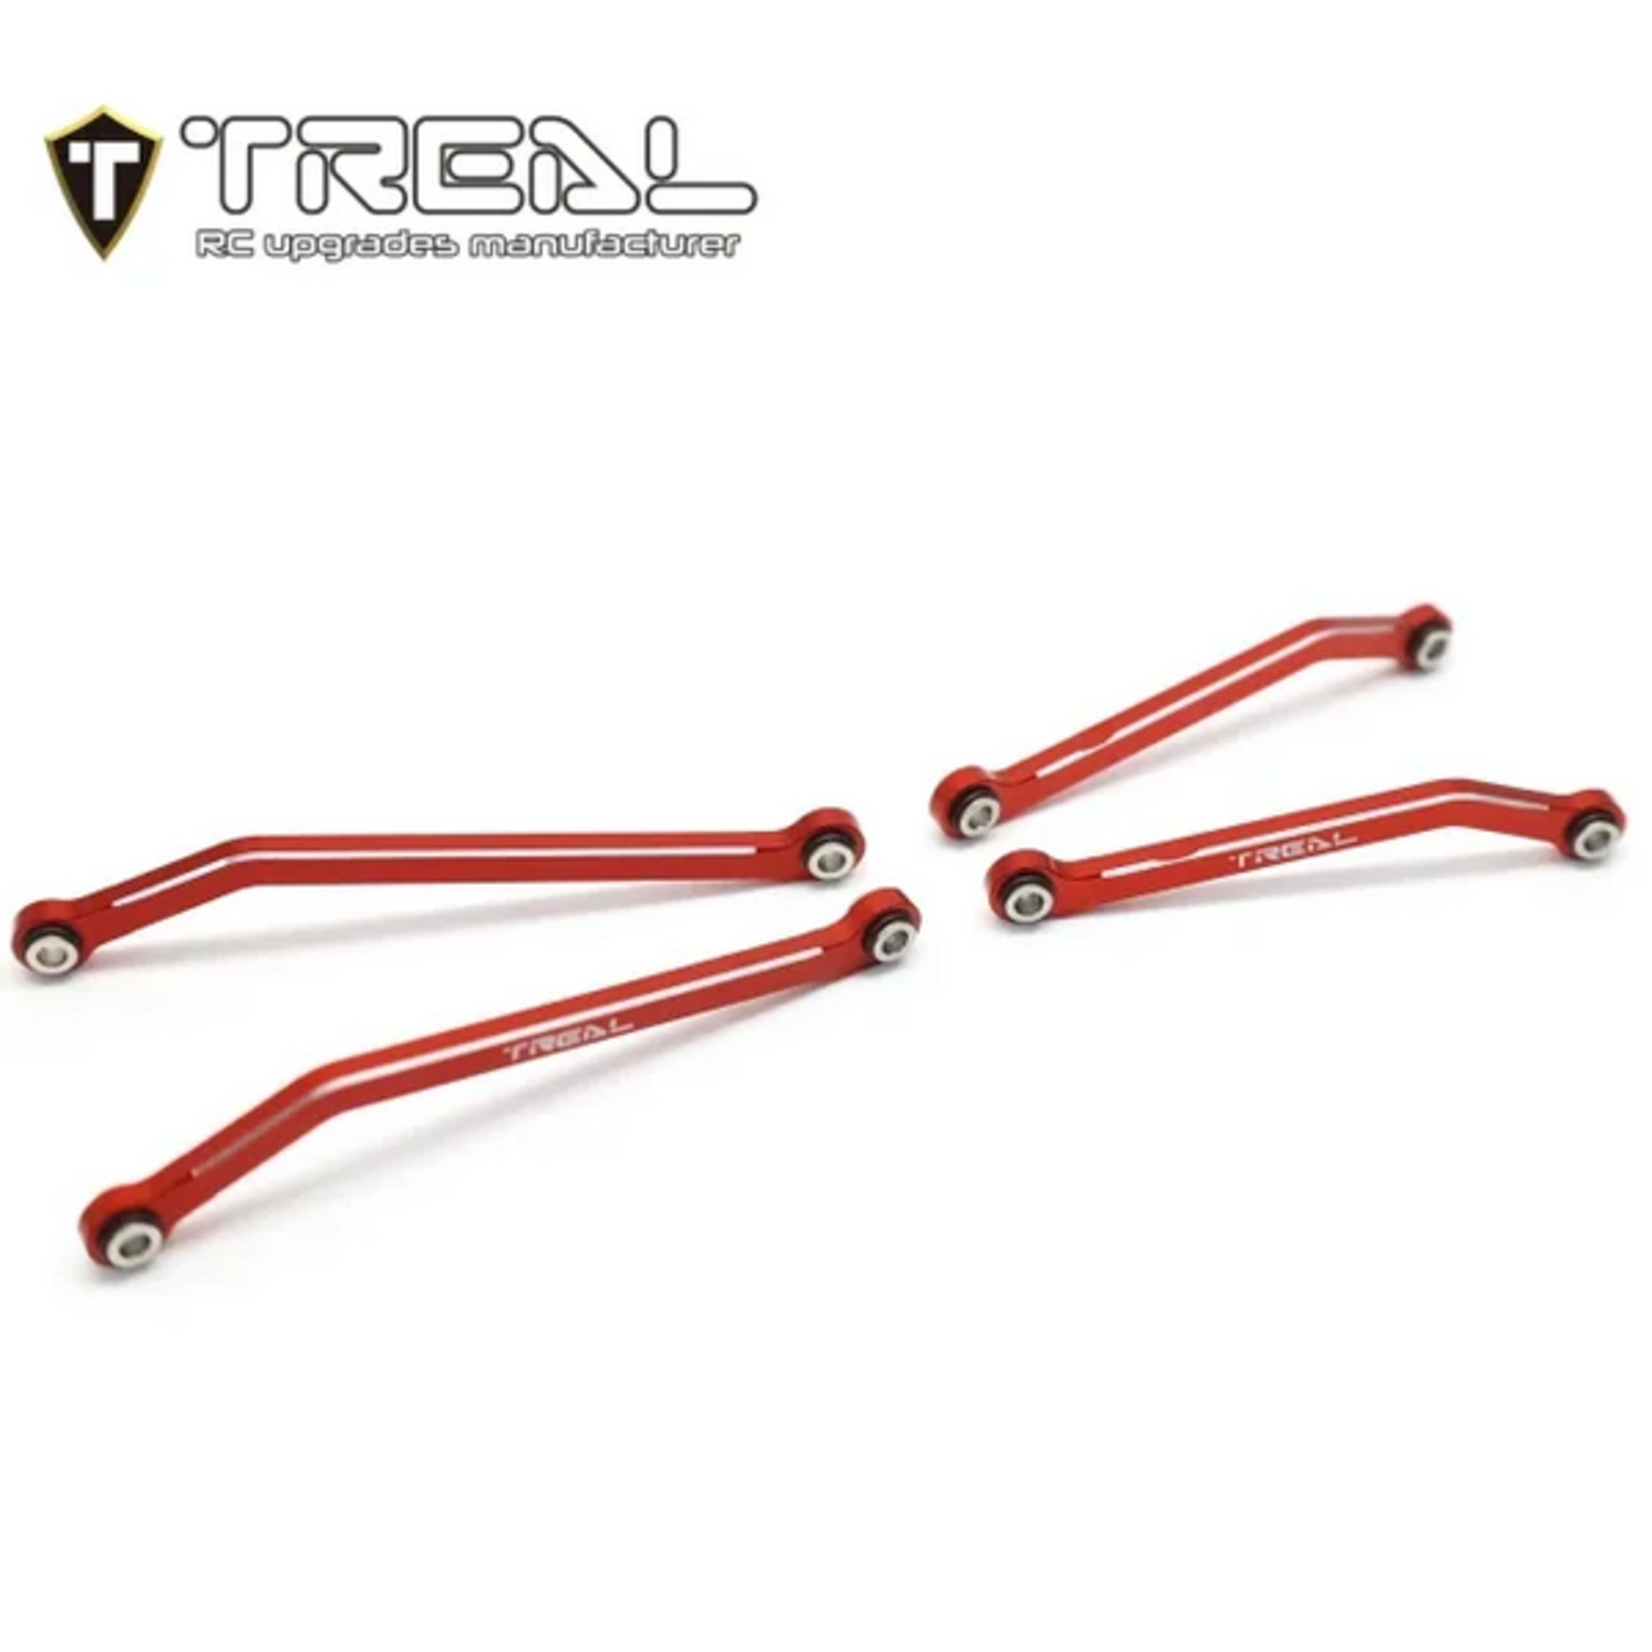 Treal Treal Hobby TRX-4M Aluminum High Clearance Lower Links (Red) (4) #X003Q5IIA1